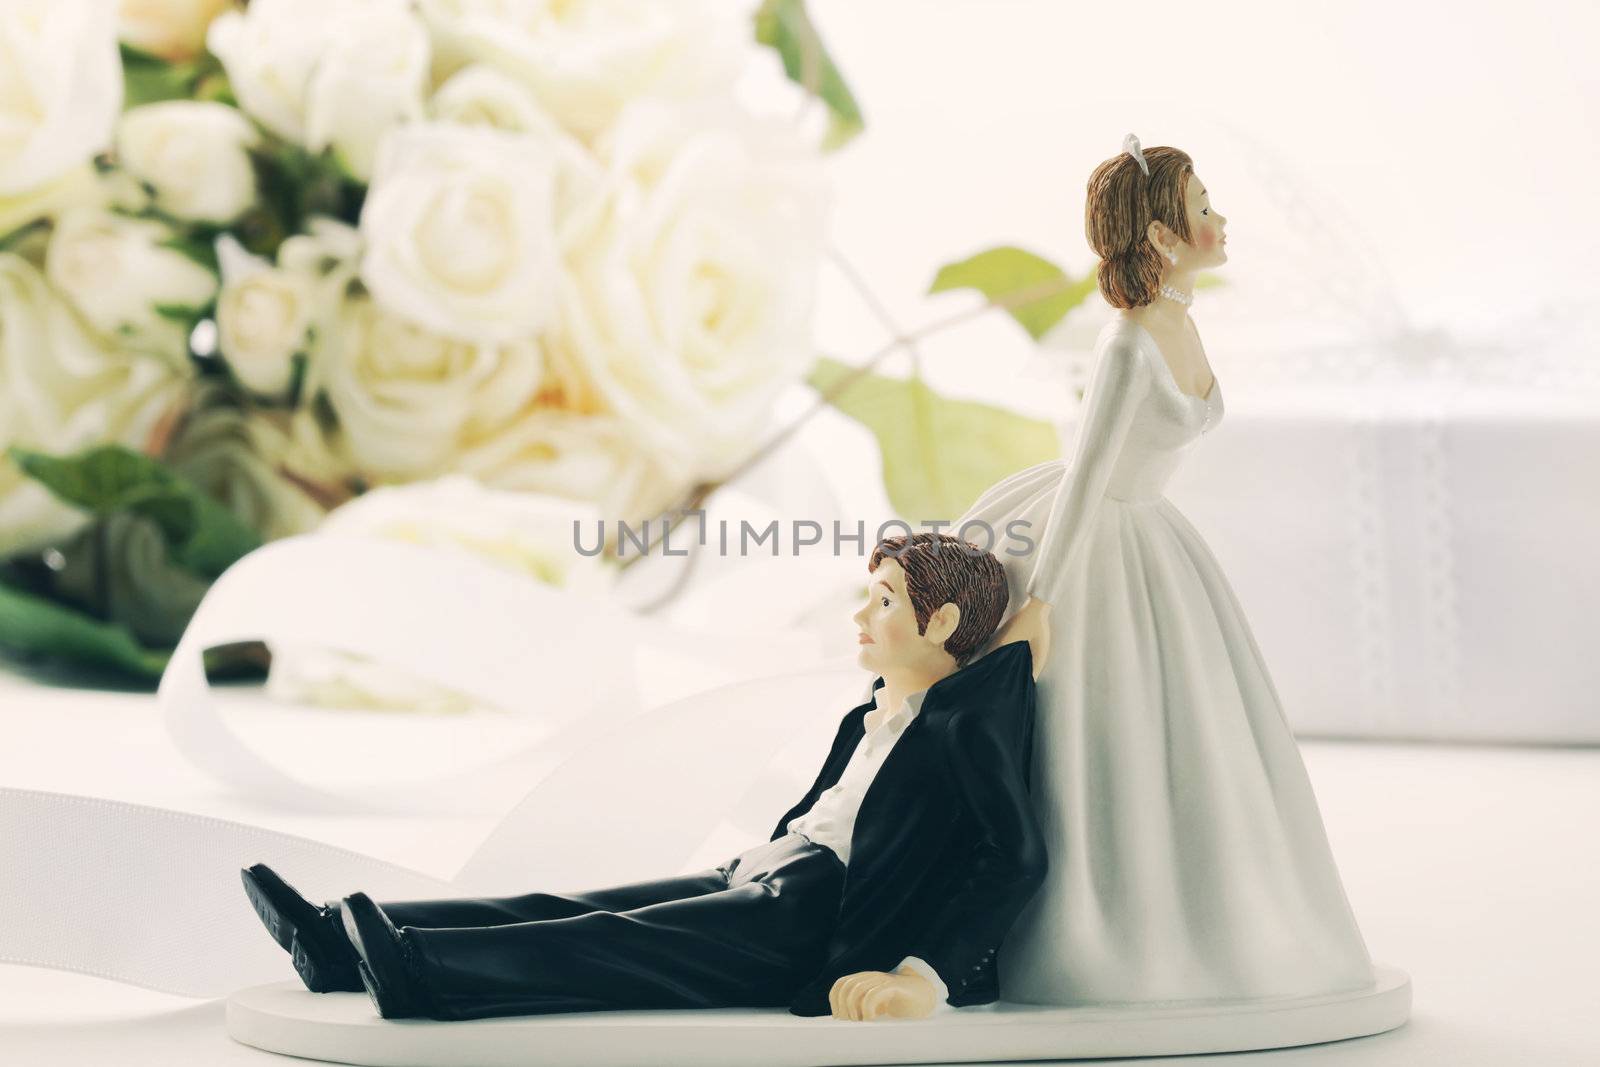 Whimsical wedding cake figurines on white by Sandralise